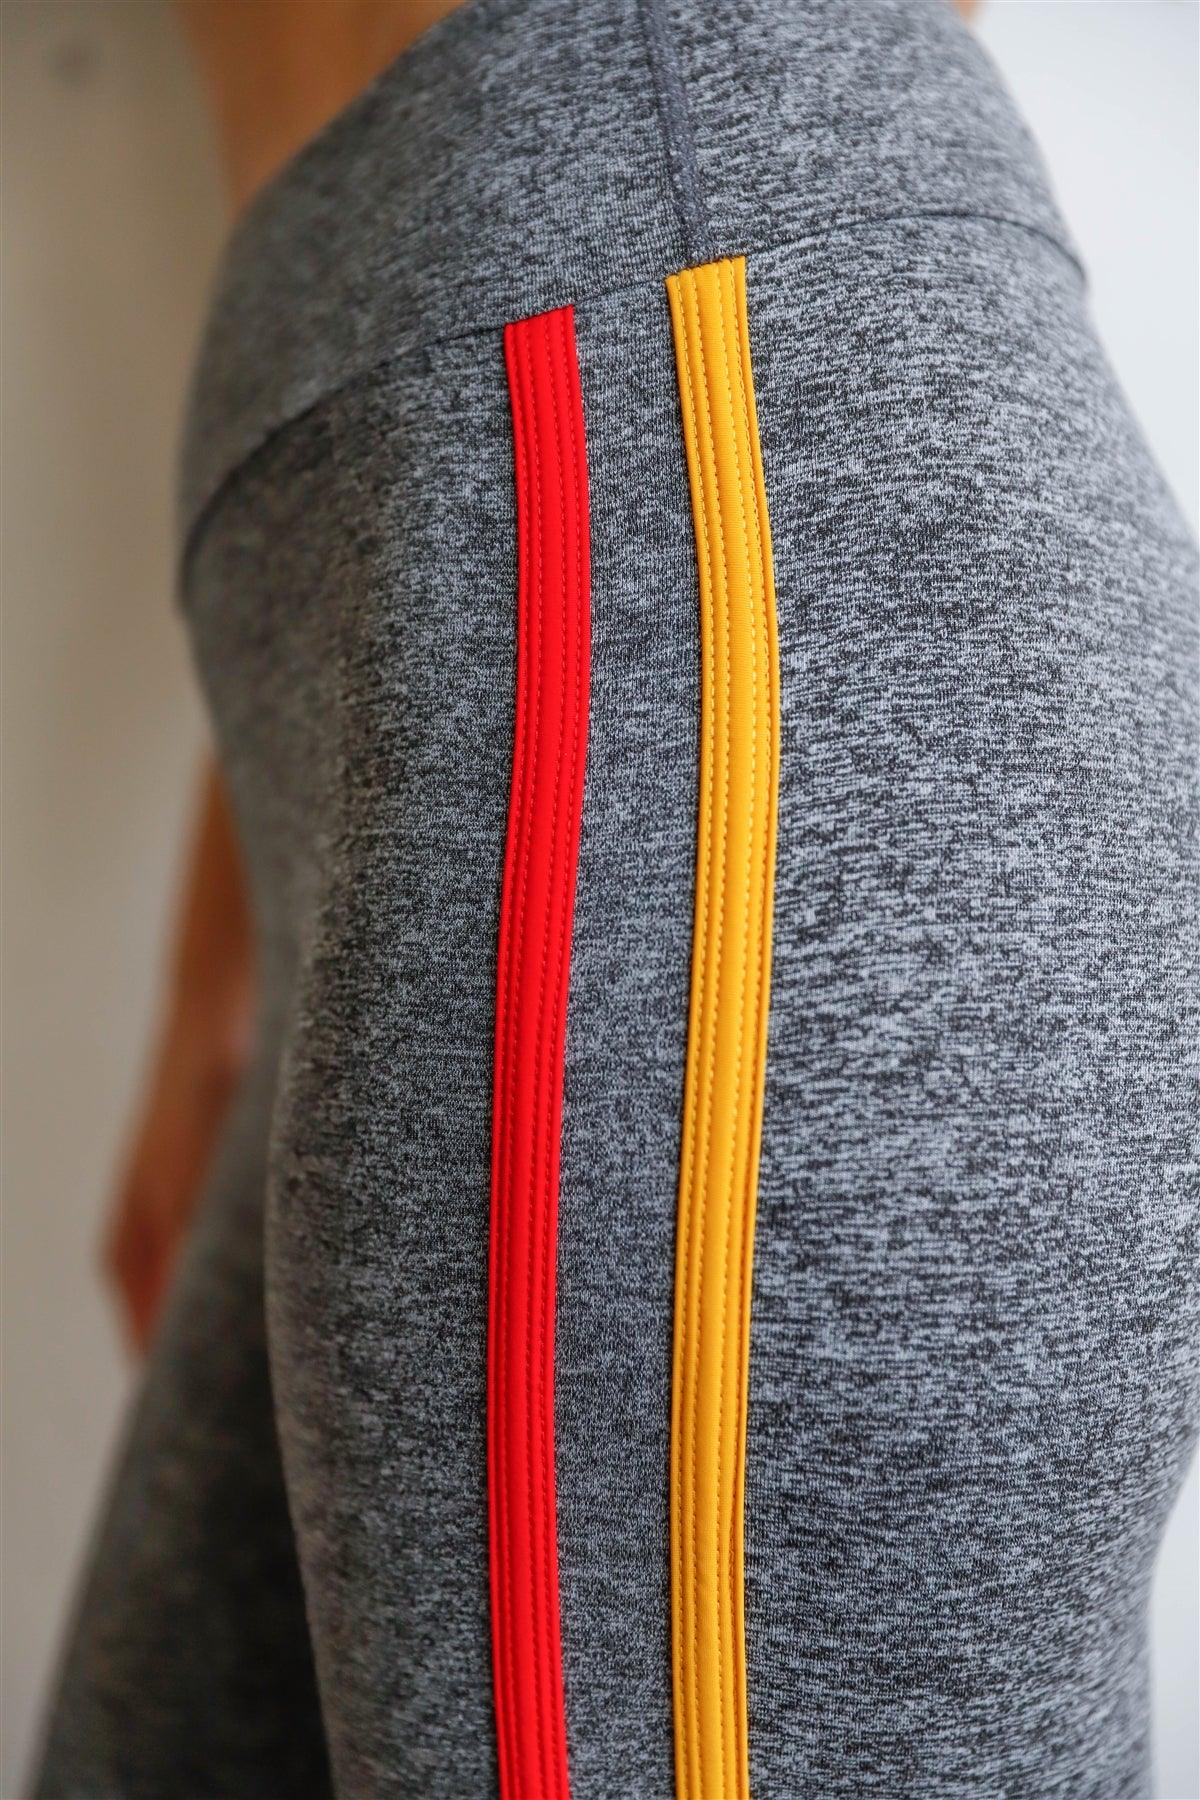 Heather Grey Red & Yellow Stripe Detail Sports Legging Pants /3-1-2